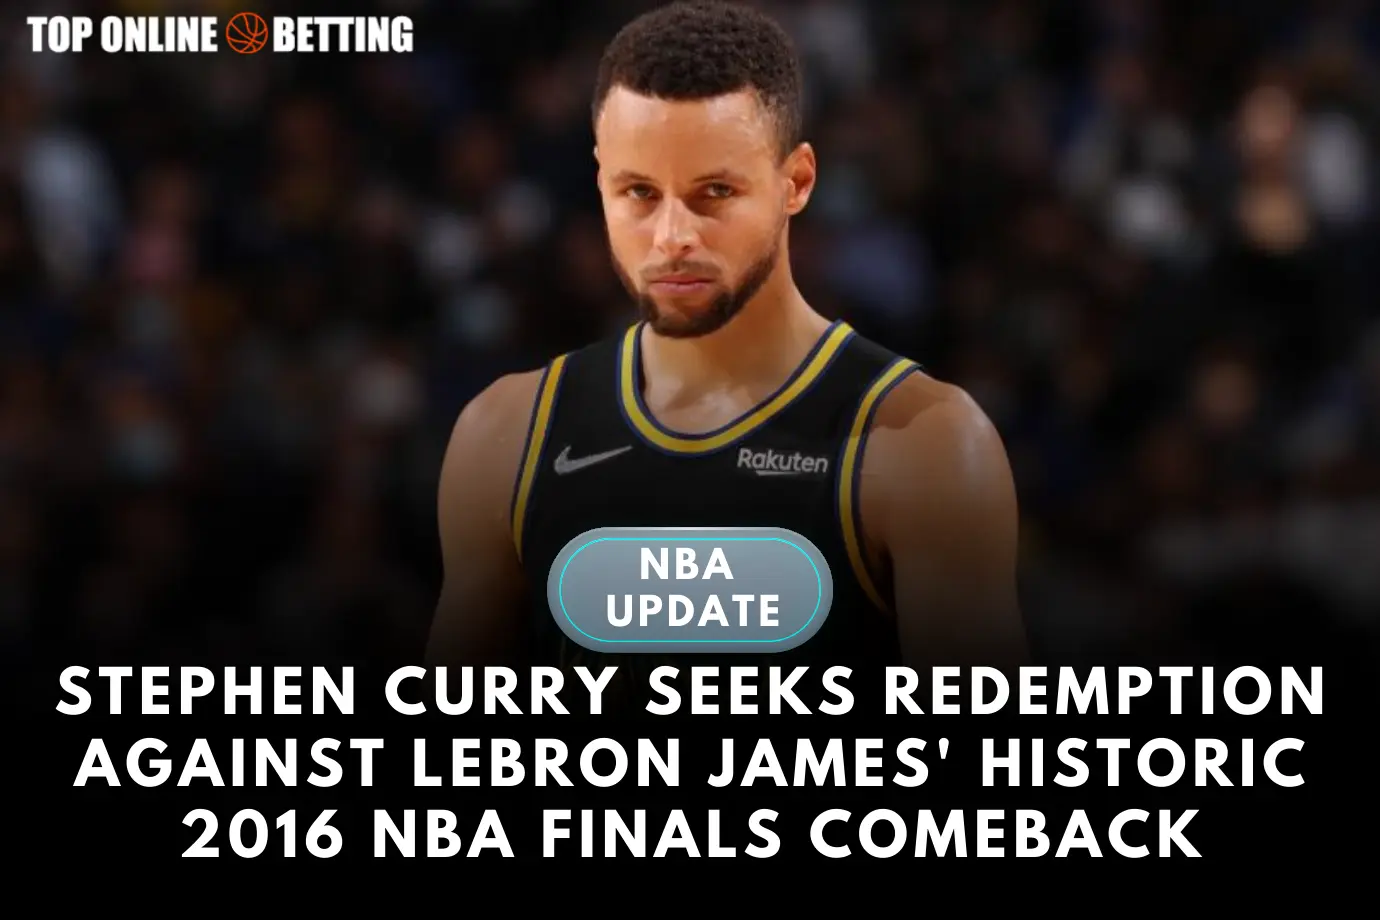 Stephen Curry Seeks Redemption Against LeBron James' Historic 2016 NBA Finals Comeback